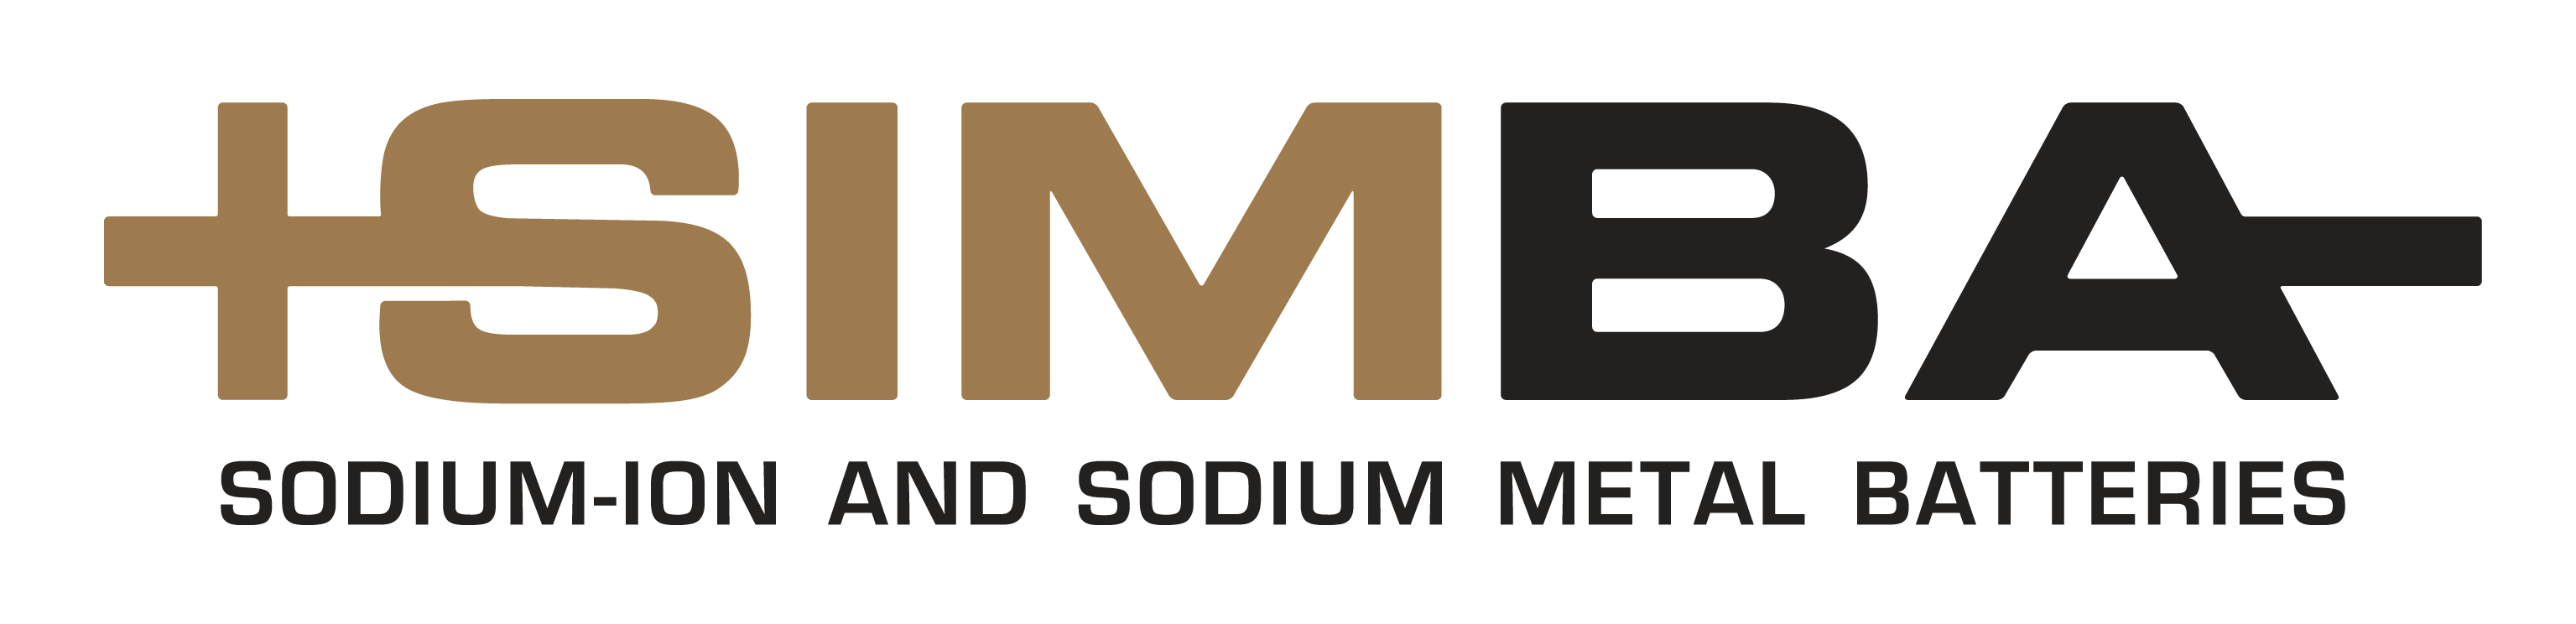 Projekt SIMBA: Sodium-Ion und Sodium Metal Batteries